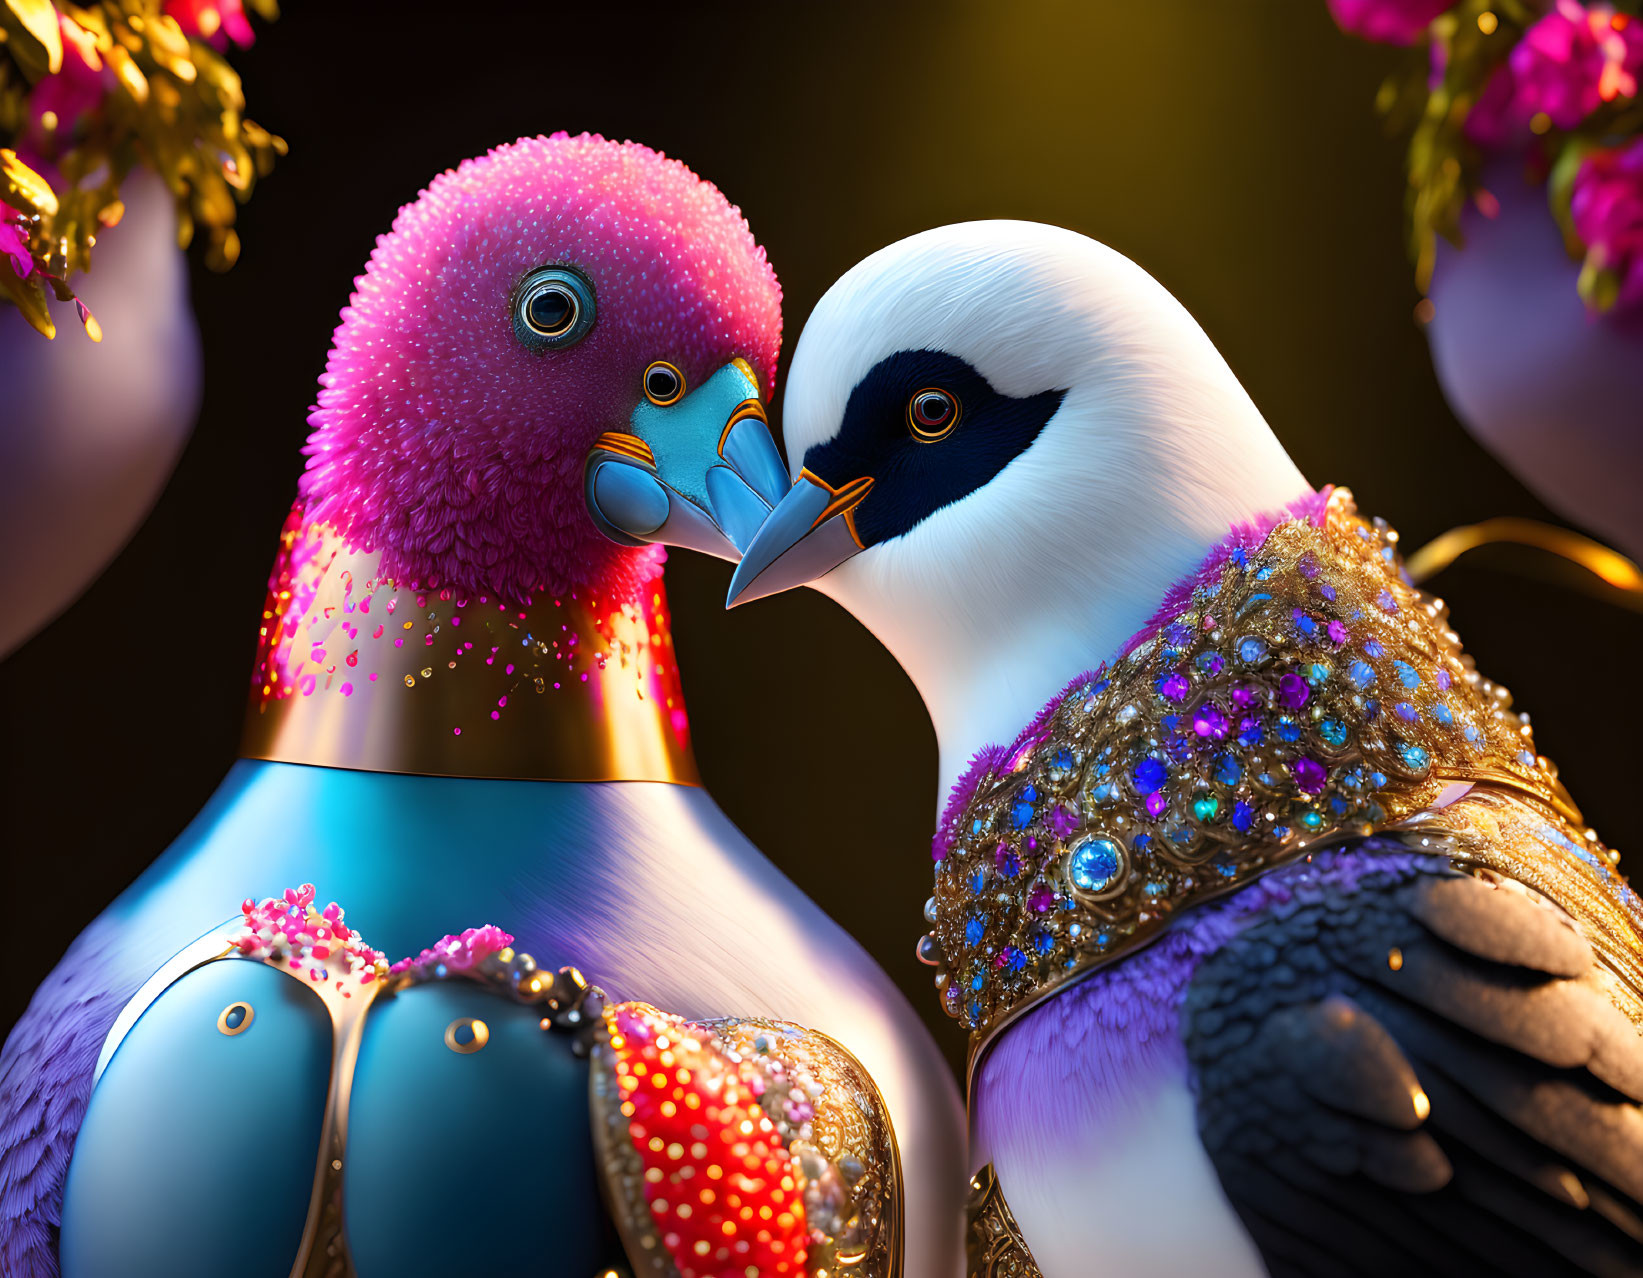 Robot pigeons's love